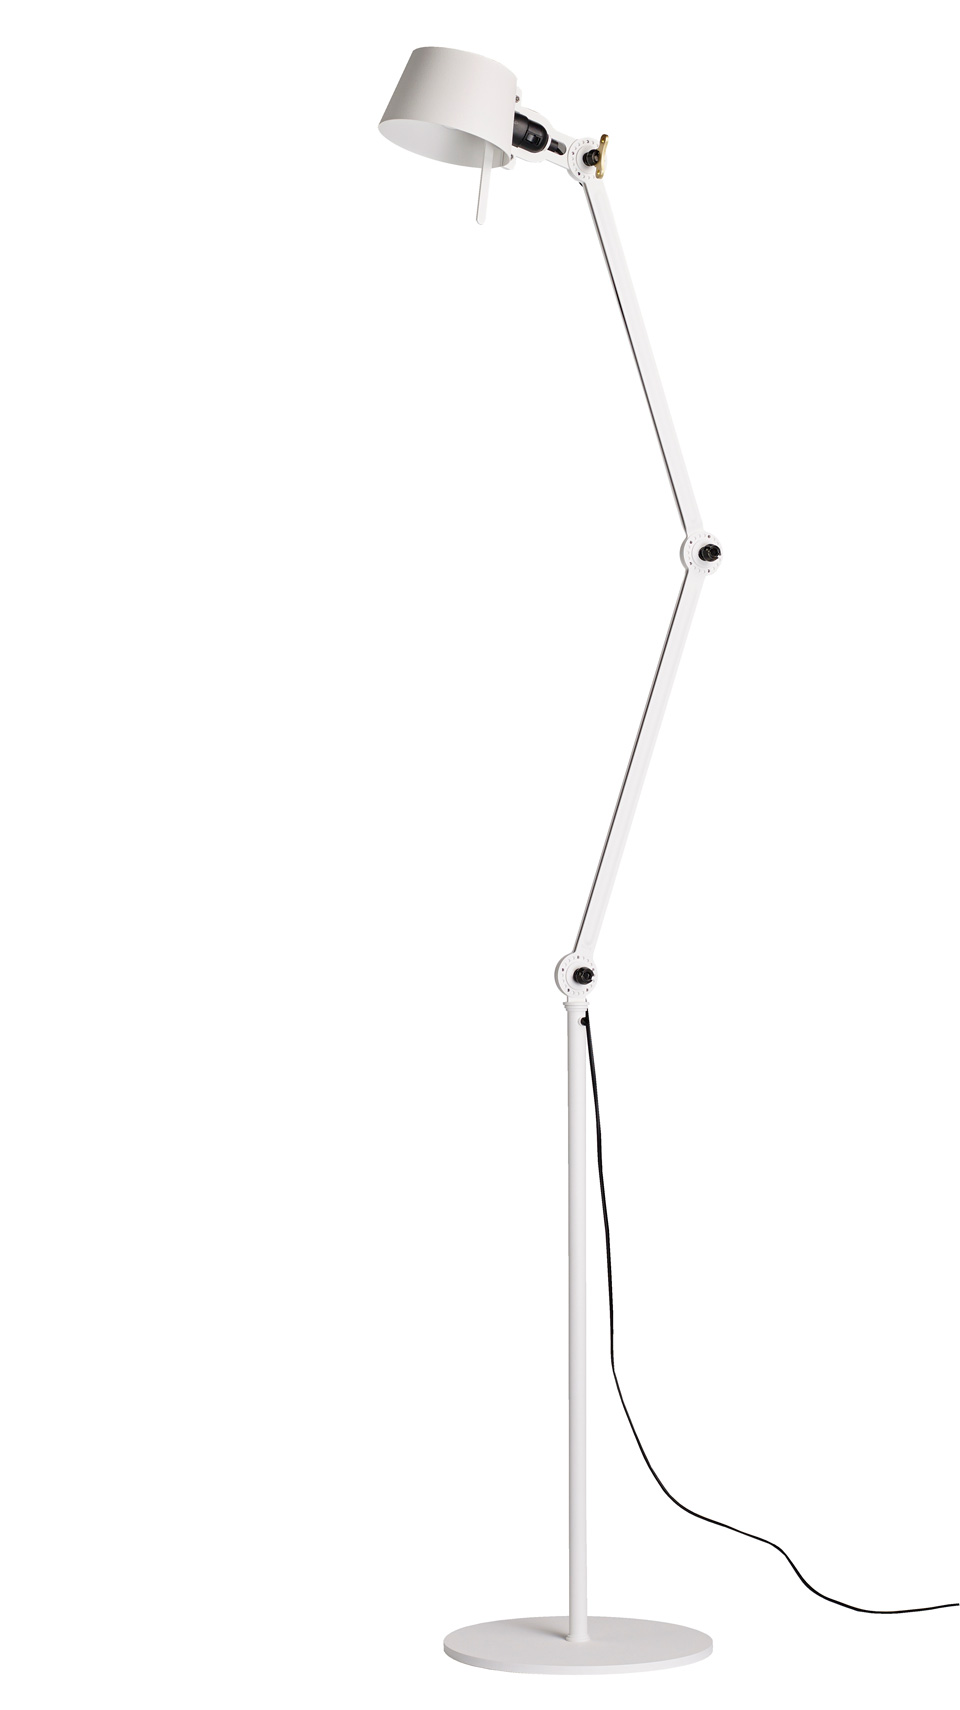 Grand lampadaire blanc design industriel Bolt. Tonone. 